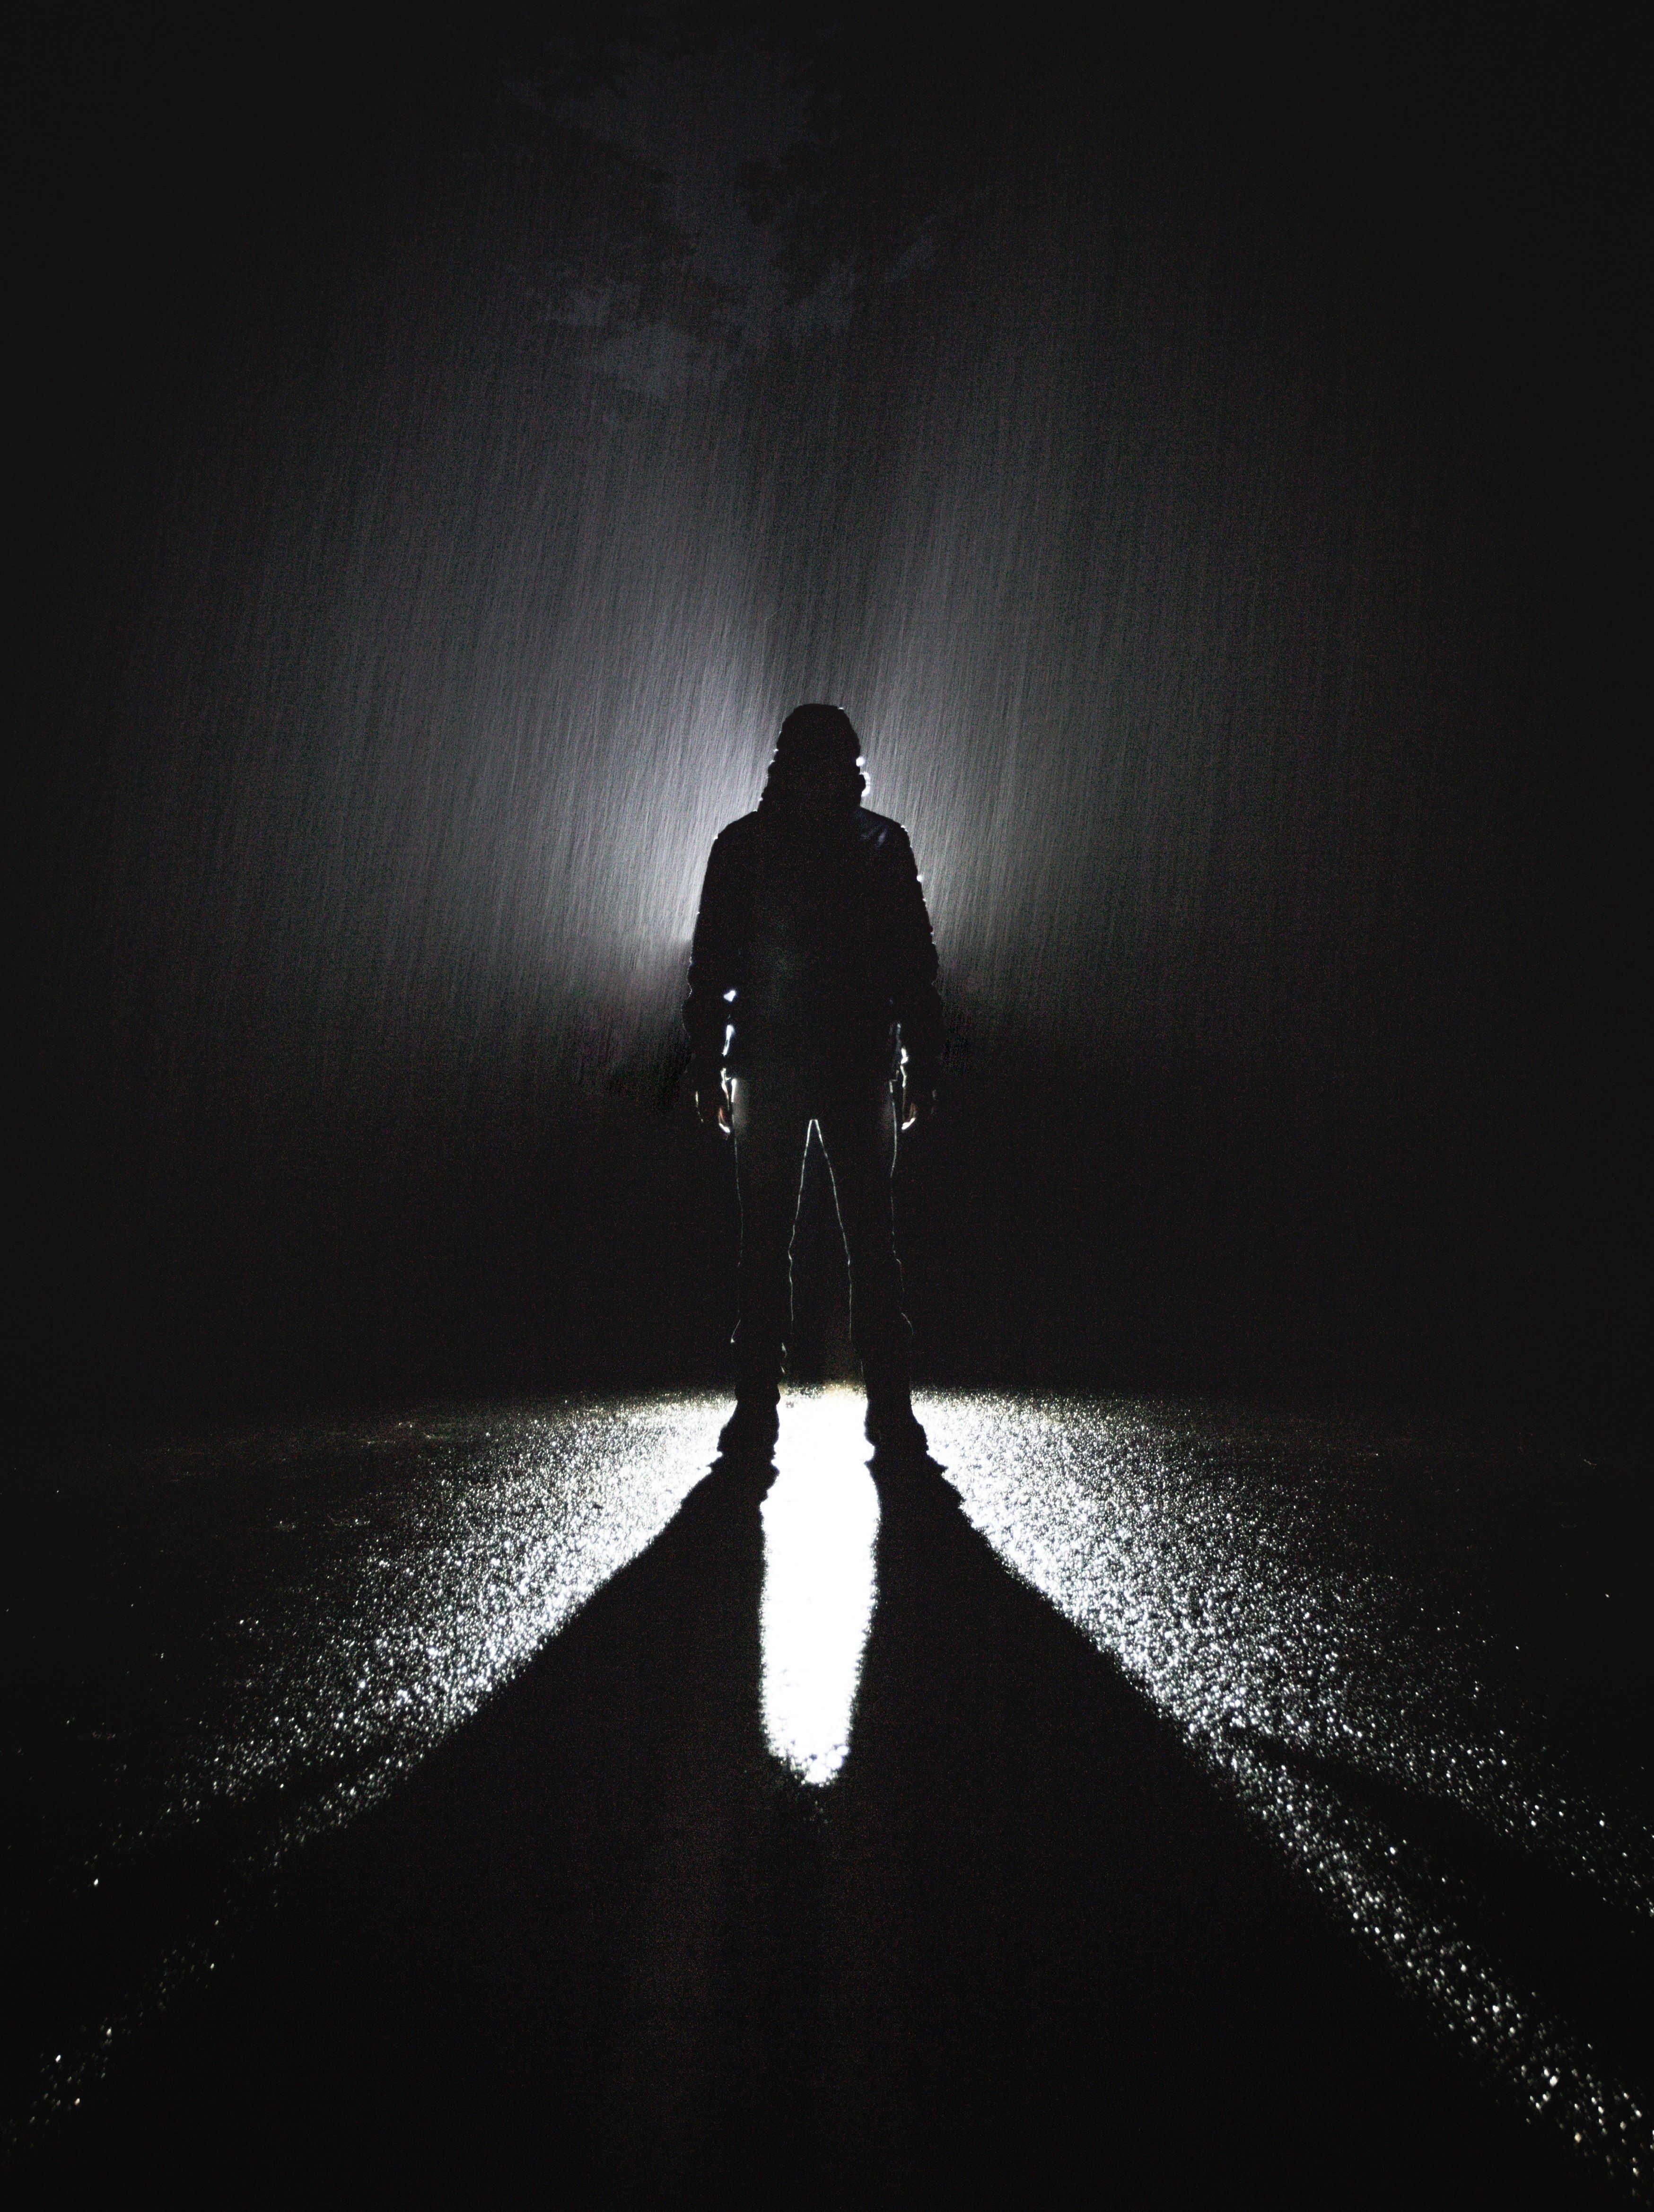 Wallpaper / the shadow of a man walking down a street